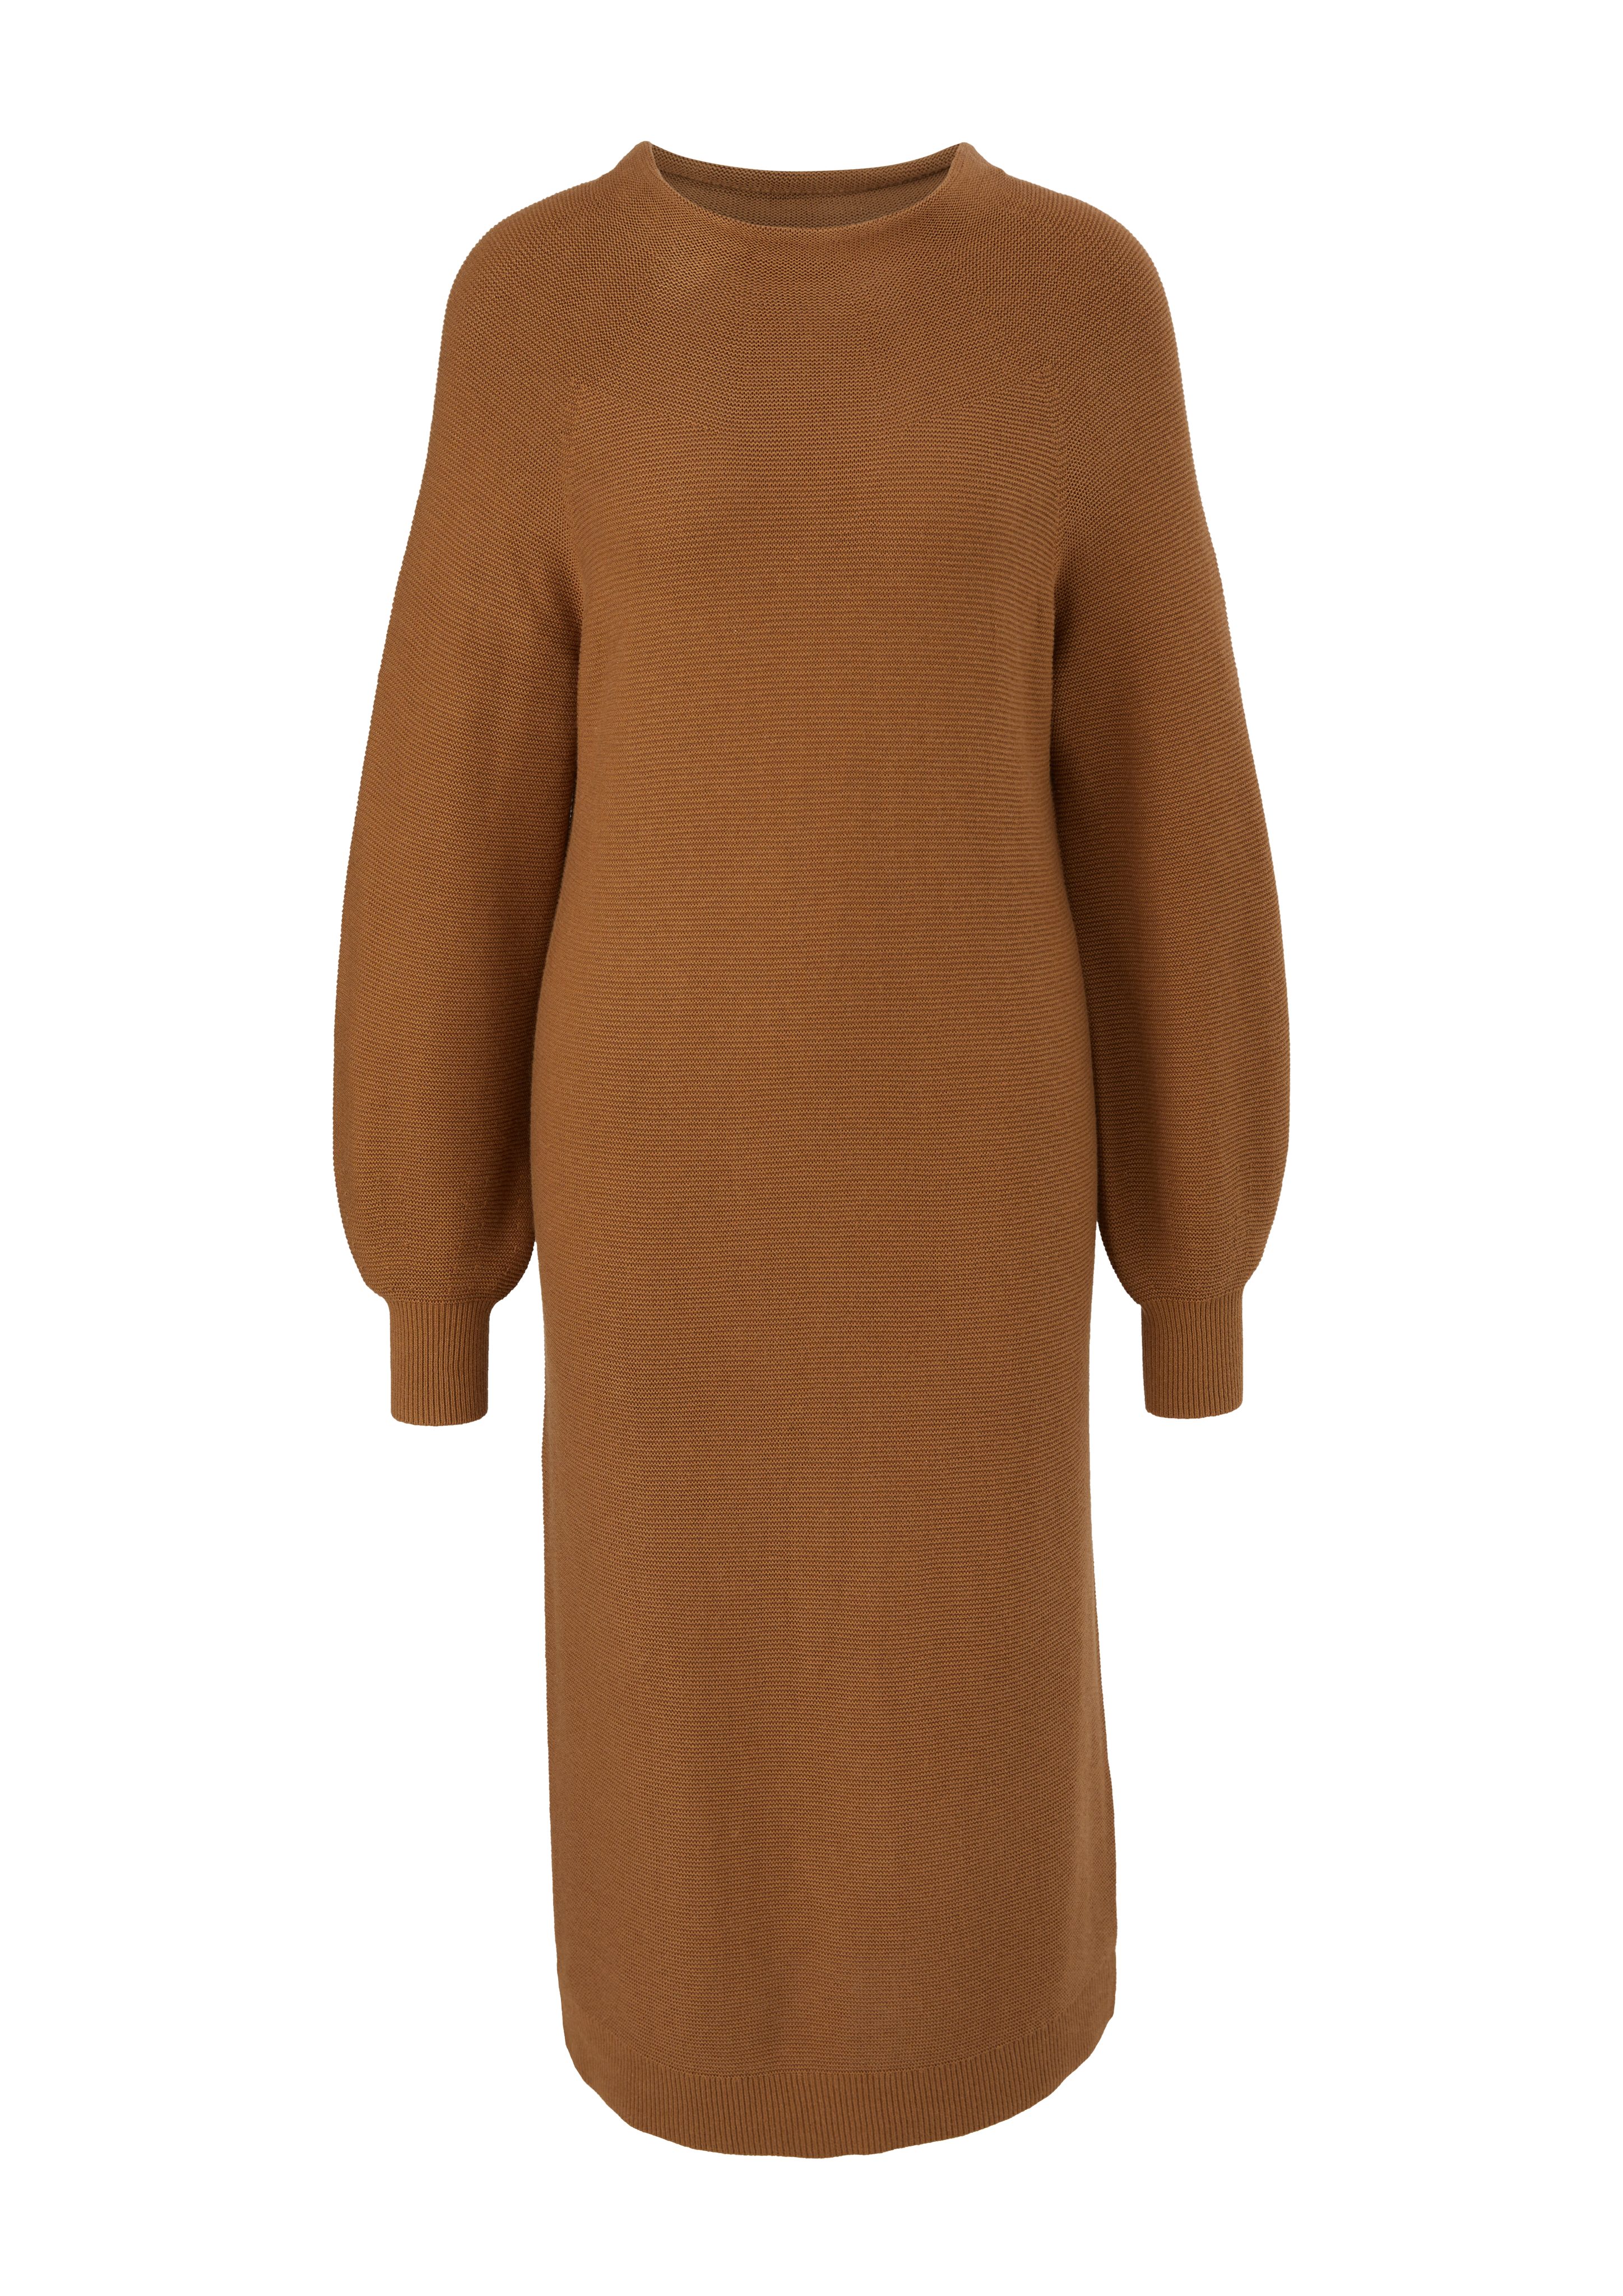 s.Oliver Minikleid Midi-Kleid mit geripptem sandstein Saum